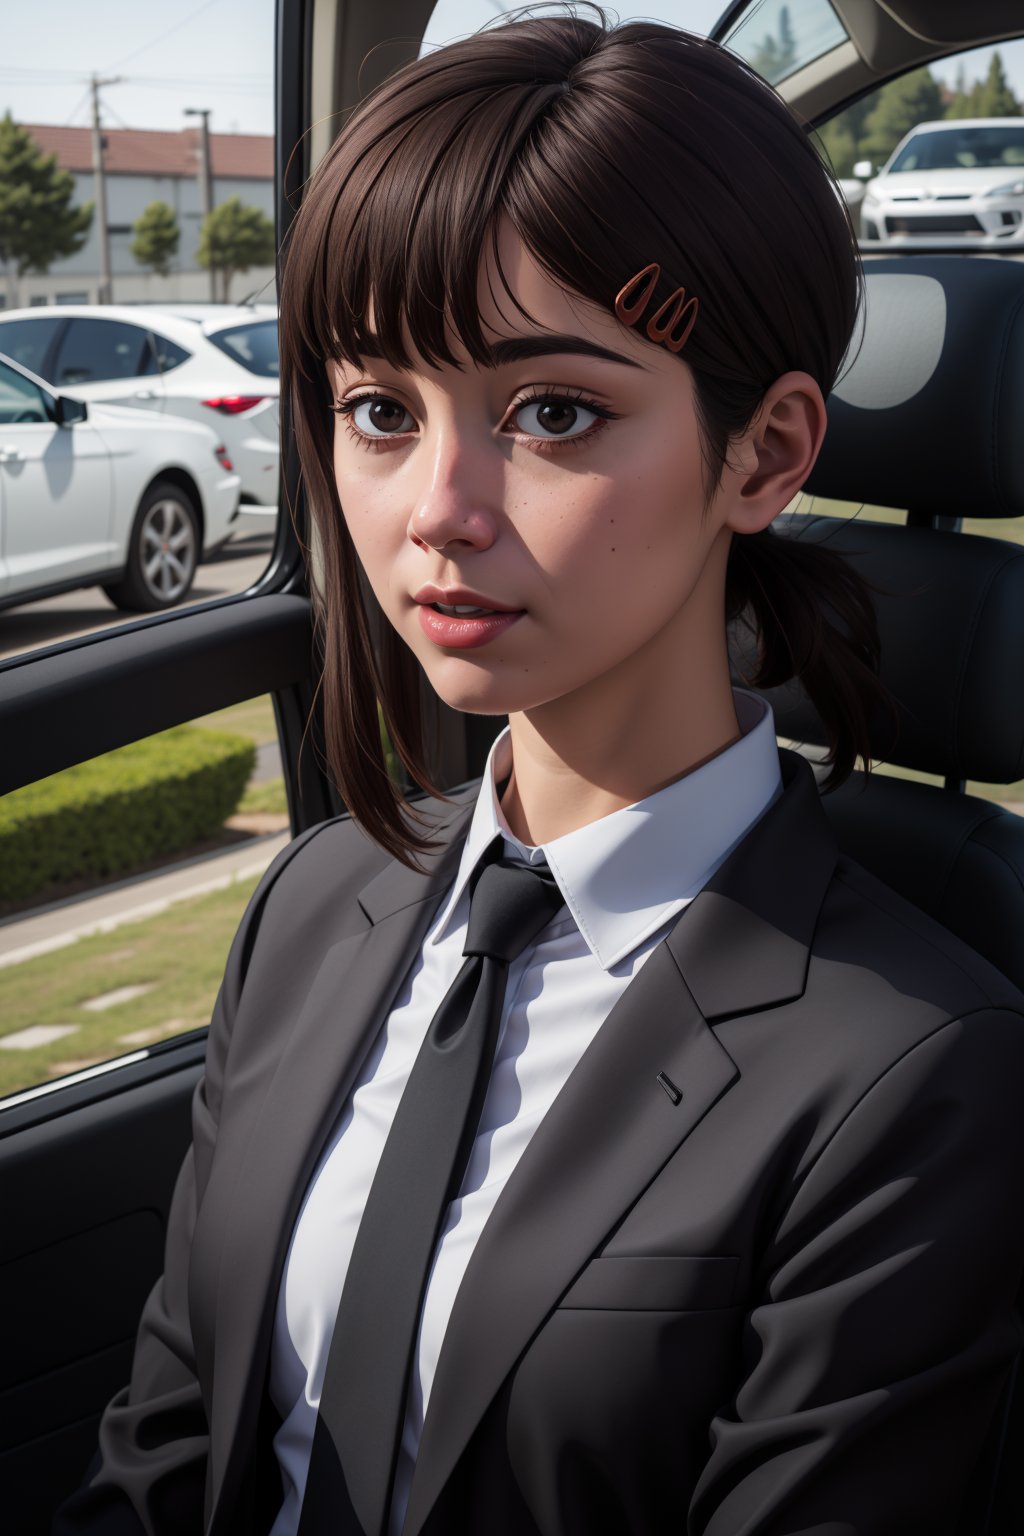 extreme quality, cg, (negative space), detailed face+eyesSMM,Kobeni wearing a suit,Kobeni driving a car